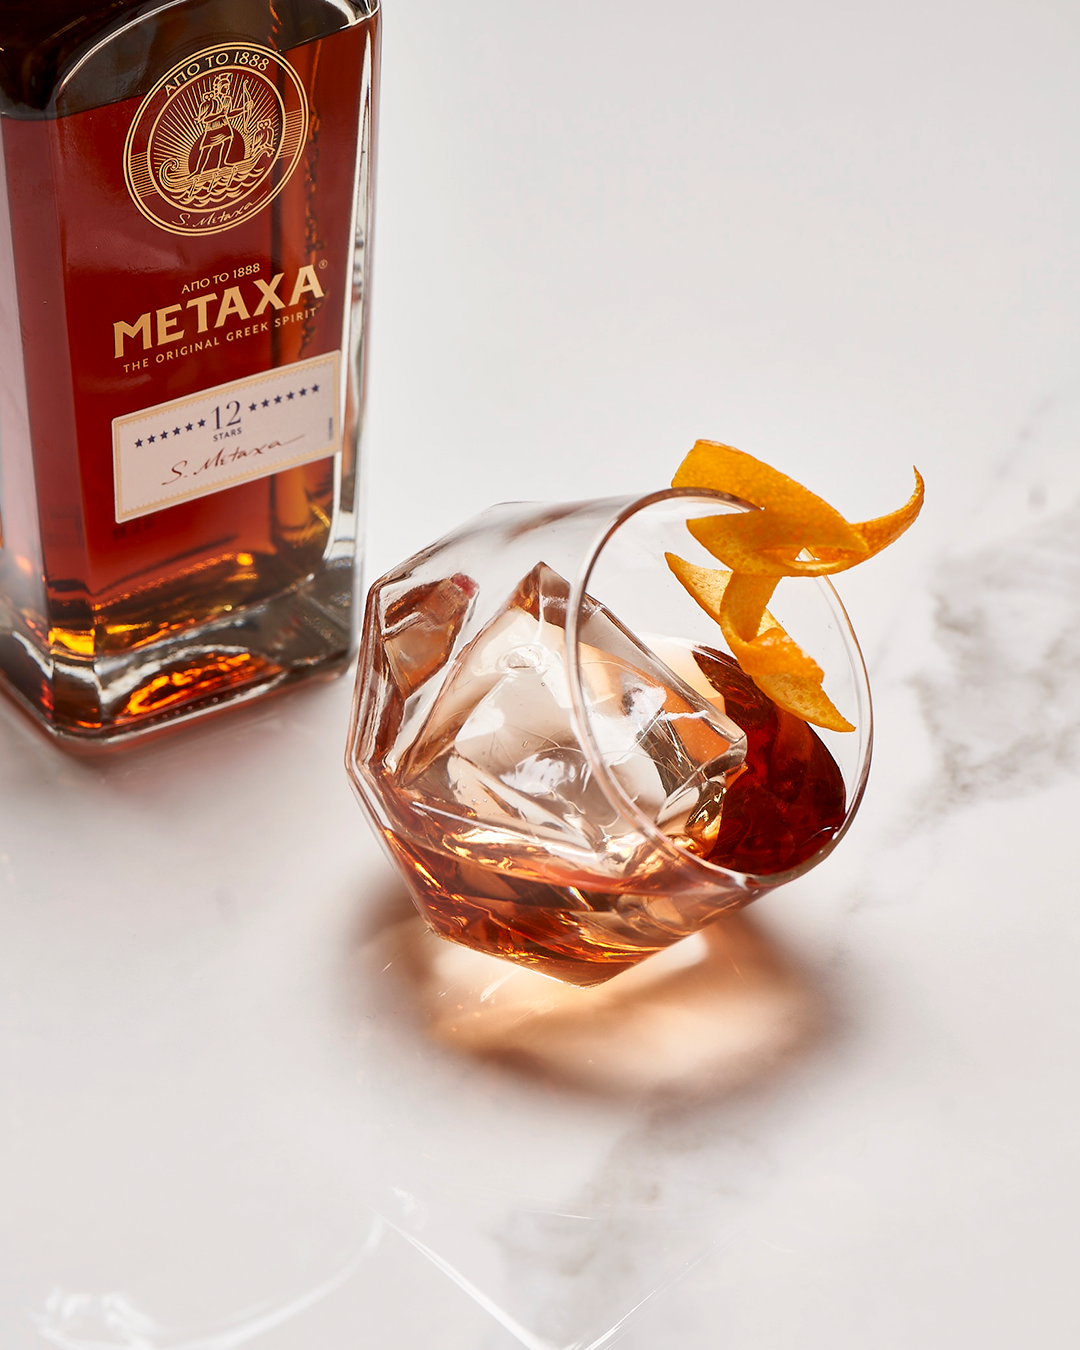 Should I drink METAXA on ice?